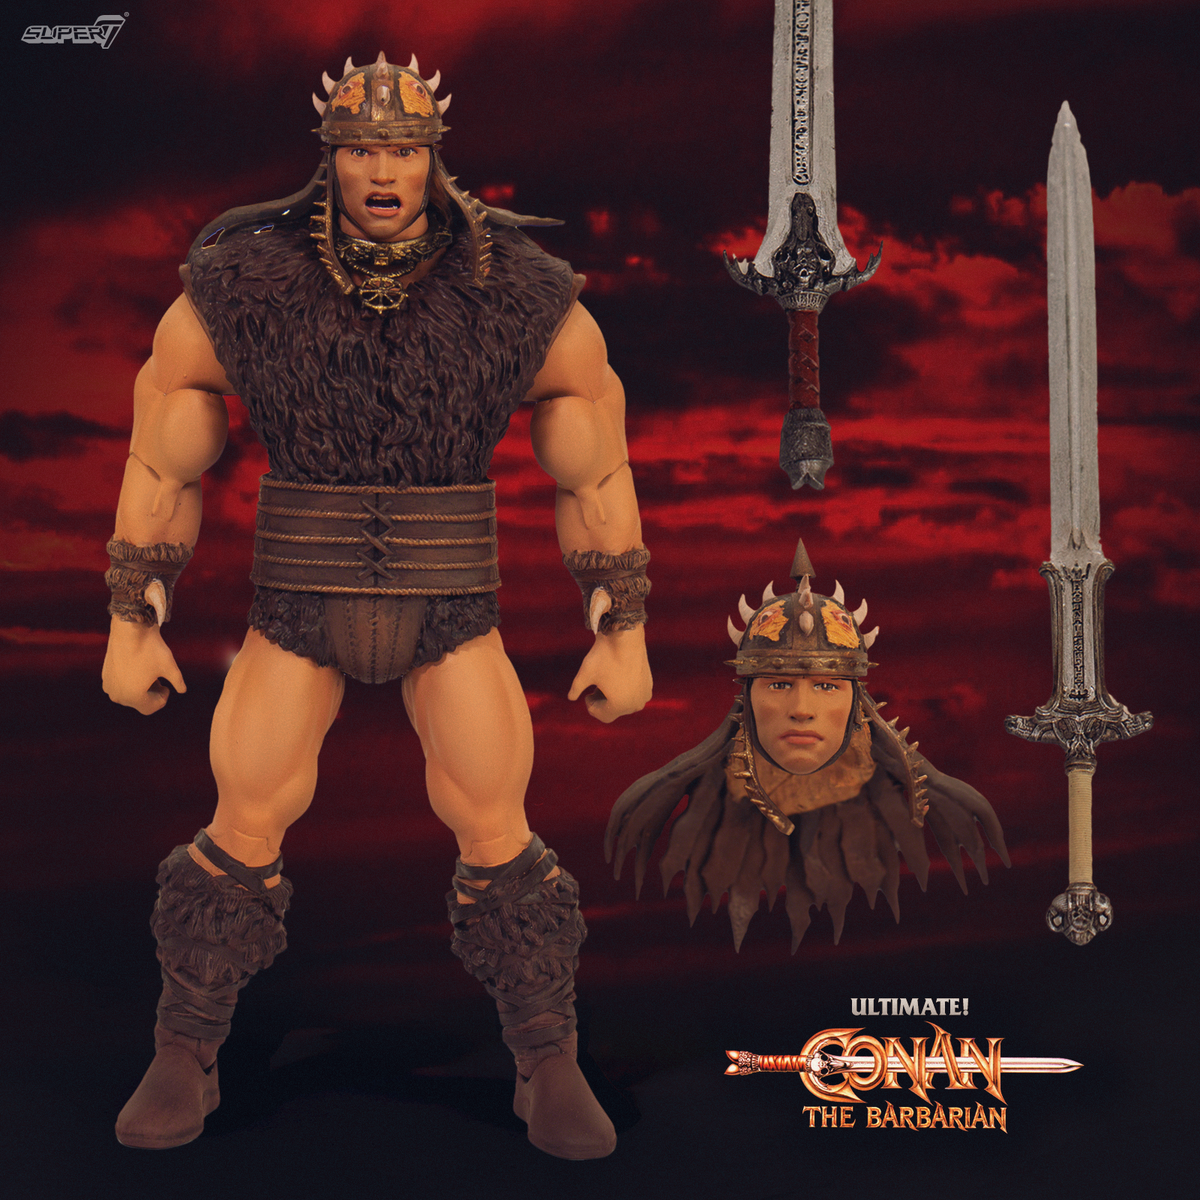 Andre den giganten, Conan the Barbarian Get The Super7 ULTIMATES Treatment